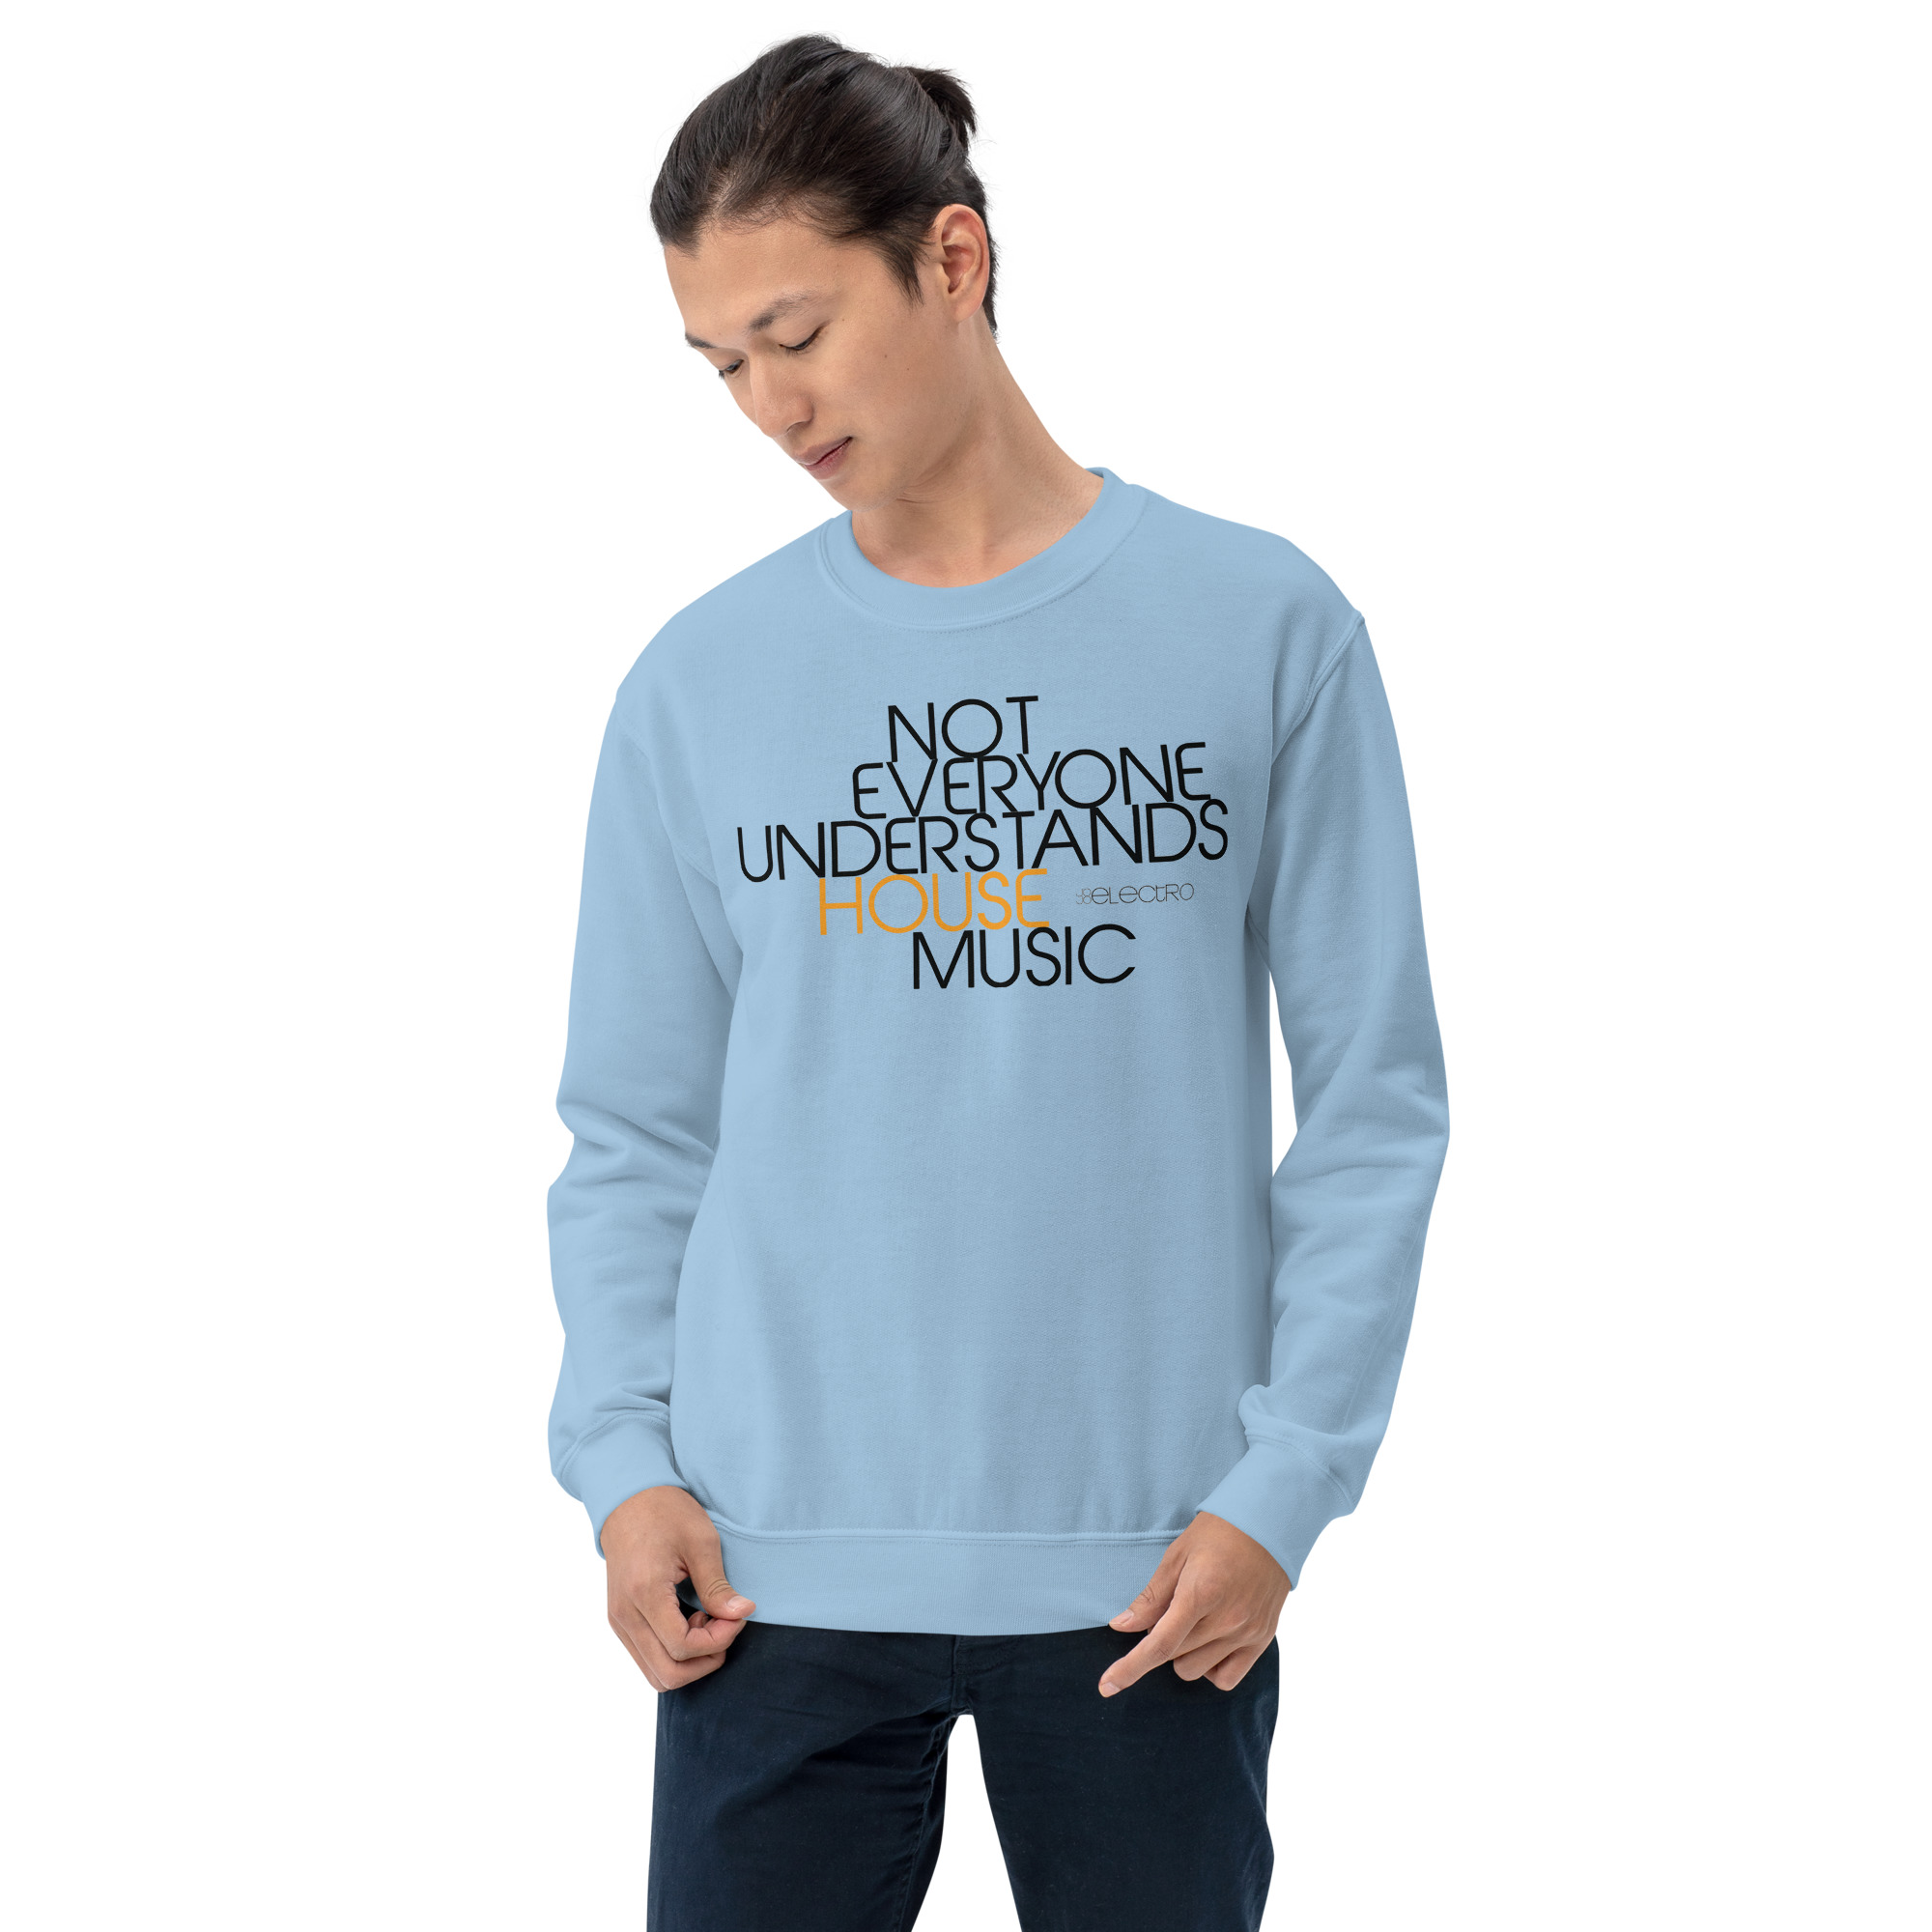 unisex-crew-neck-sweatshirt-light-blue-front-653c78b9a9de5.jpg